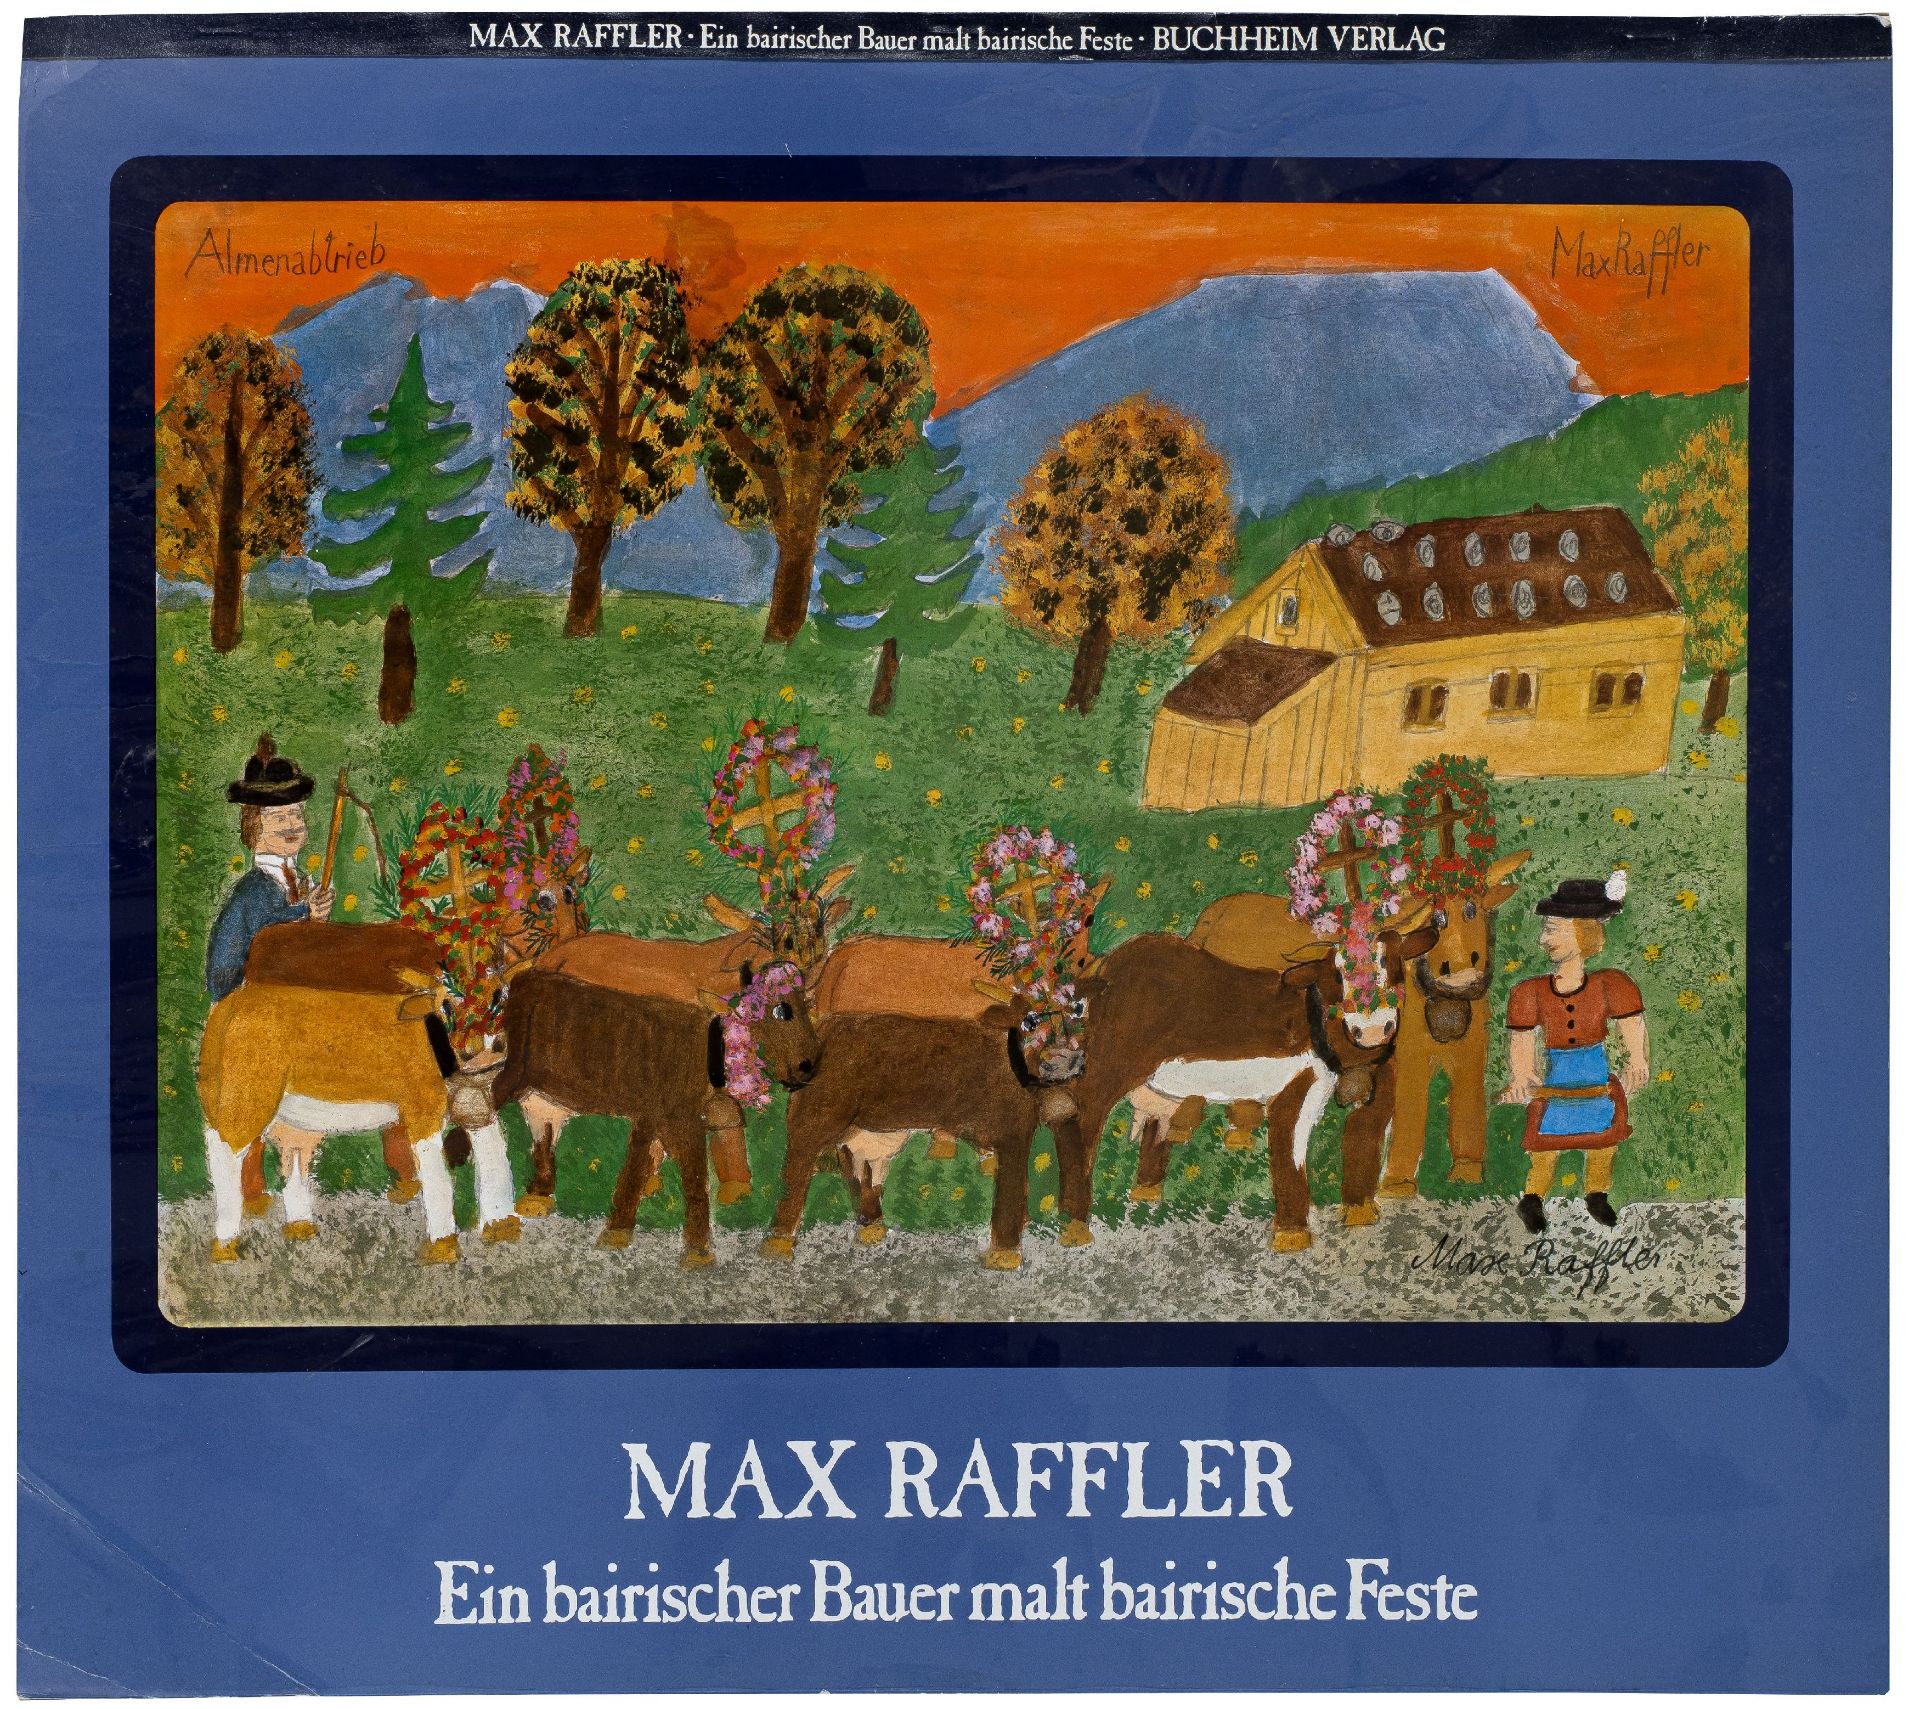 Raffler, Max | 1902 Greifenberg am Ammersee - 1988 Ebenda